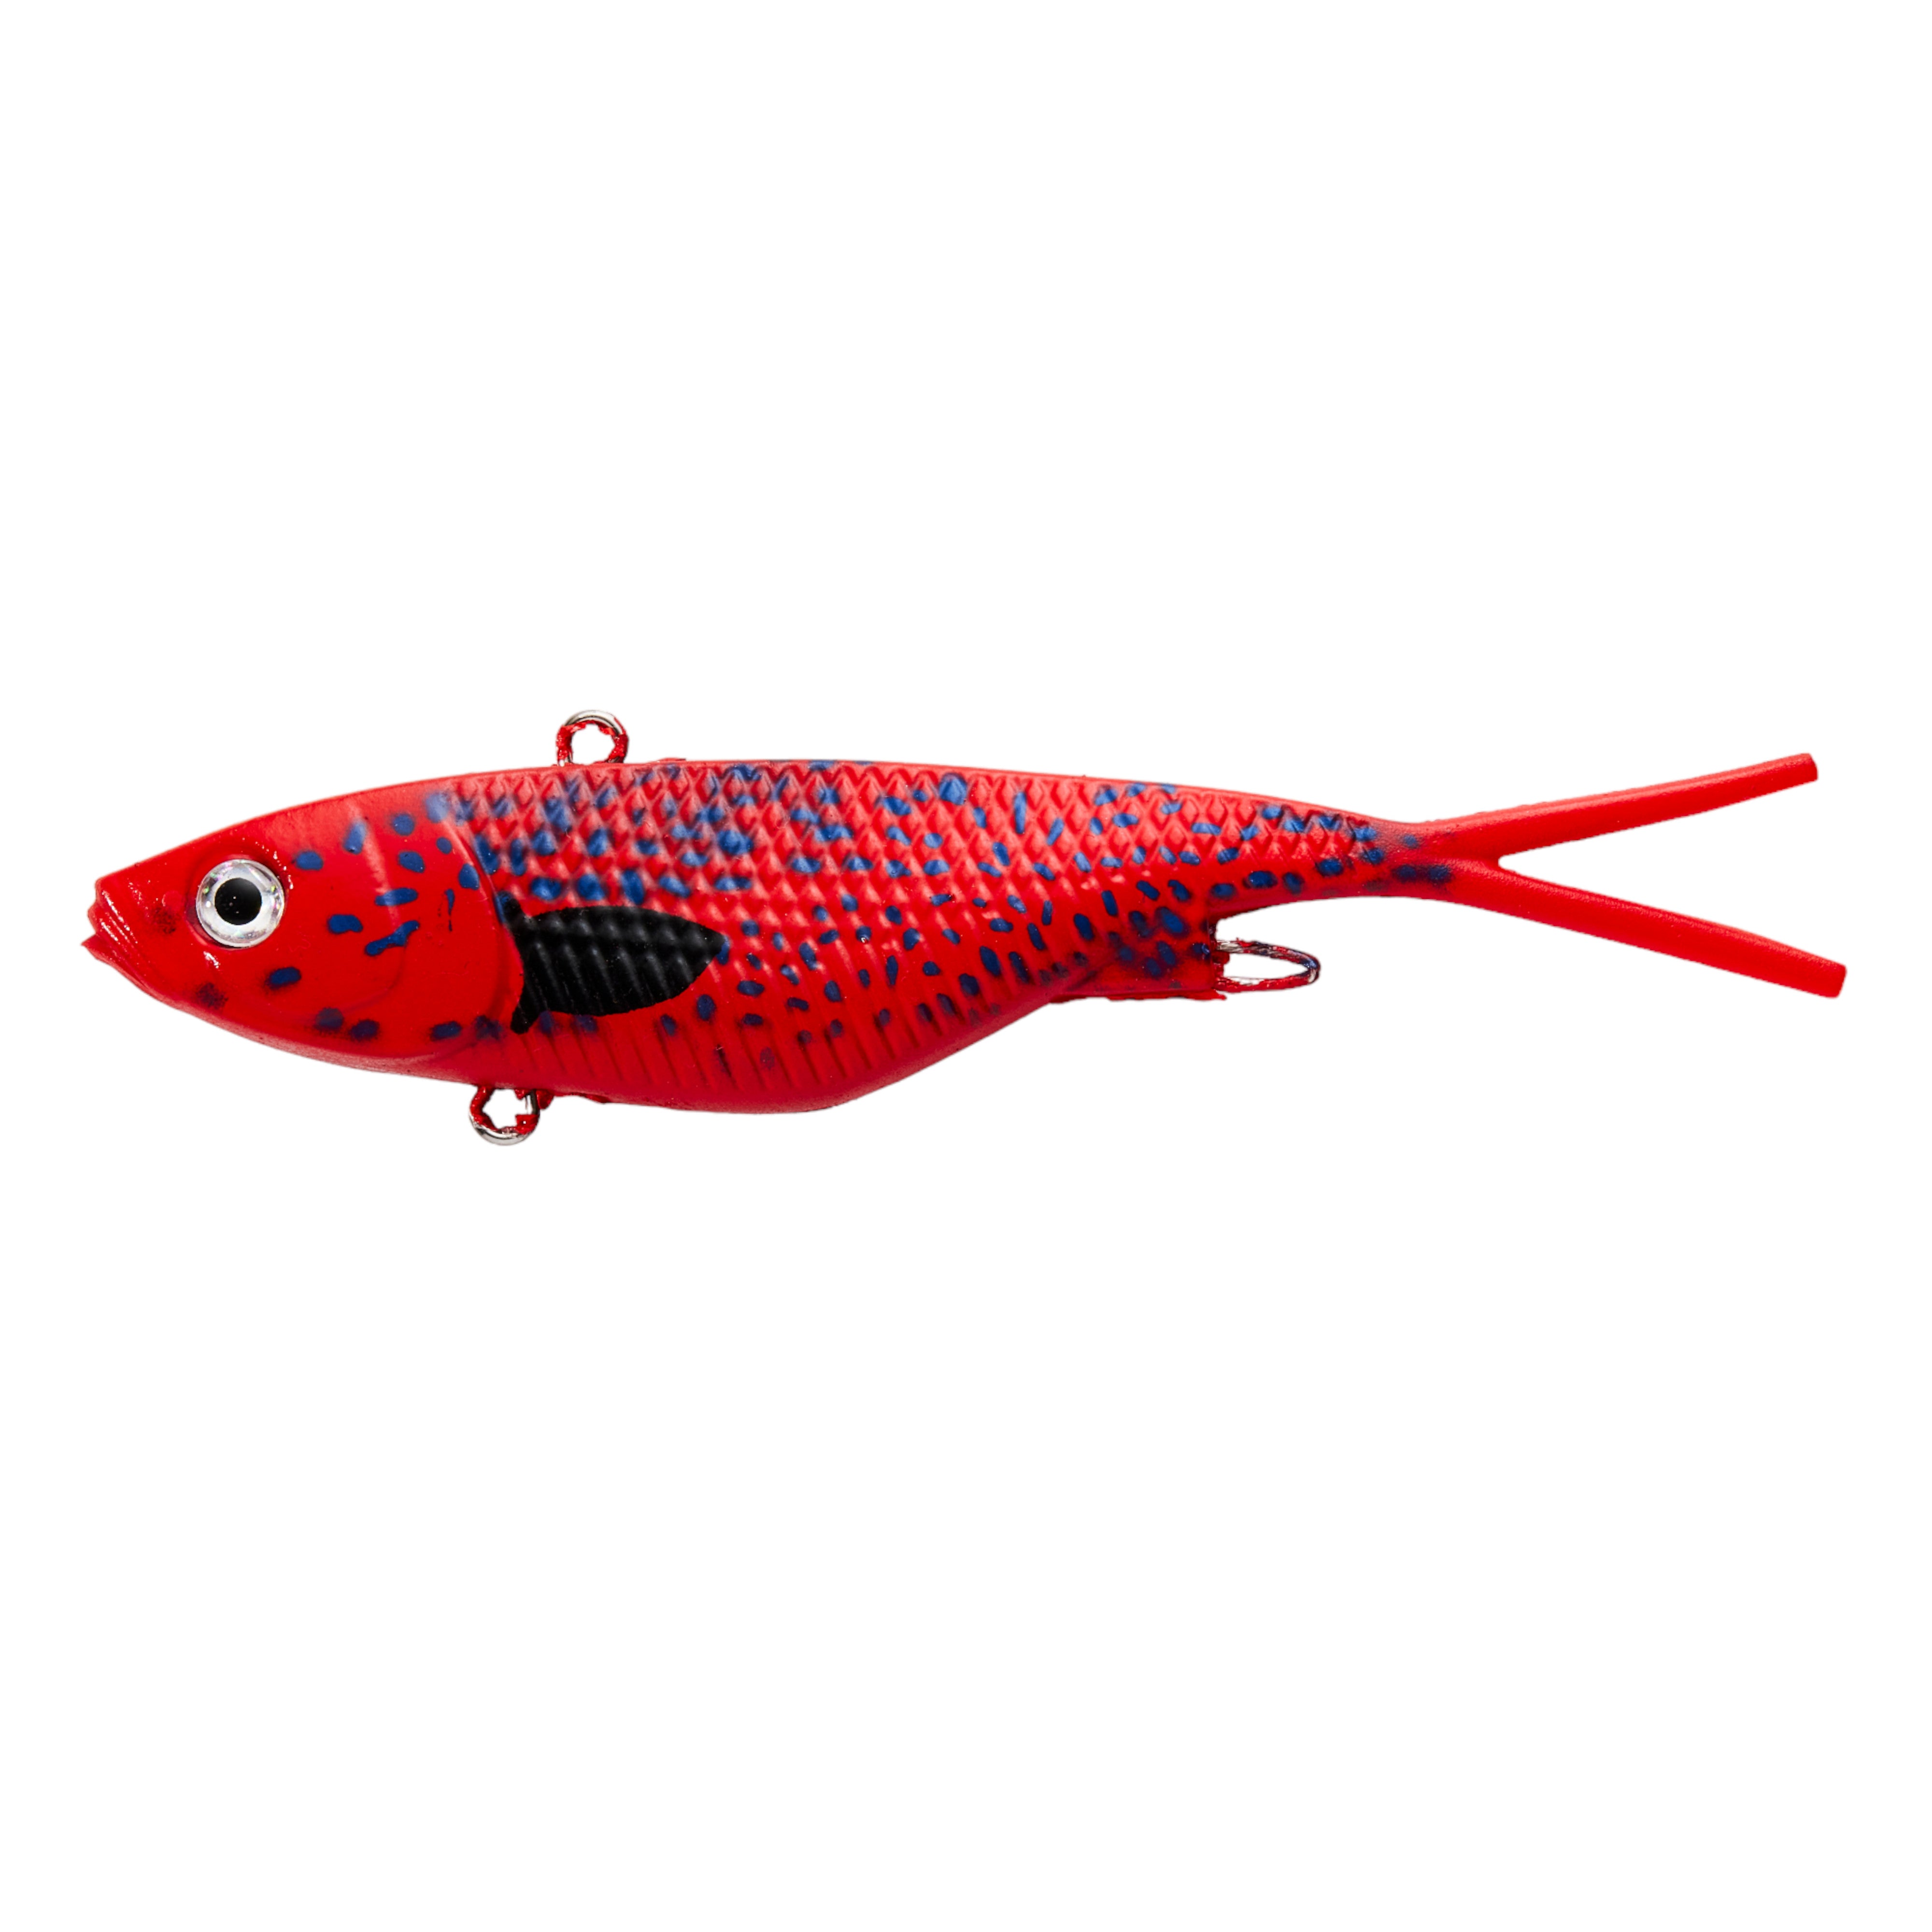 Yakamito ViperS 120 Soft Vibe Lure – Compleat Angler Australia